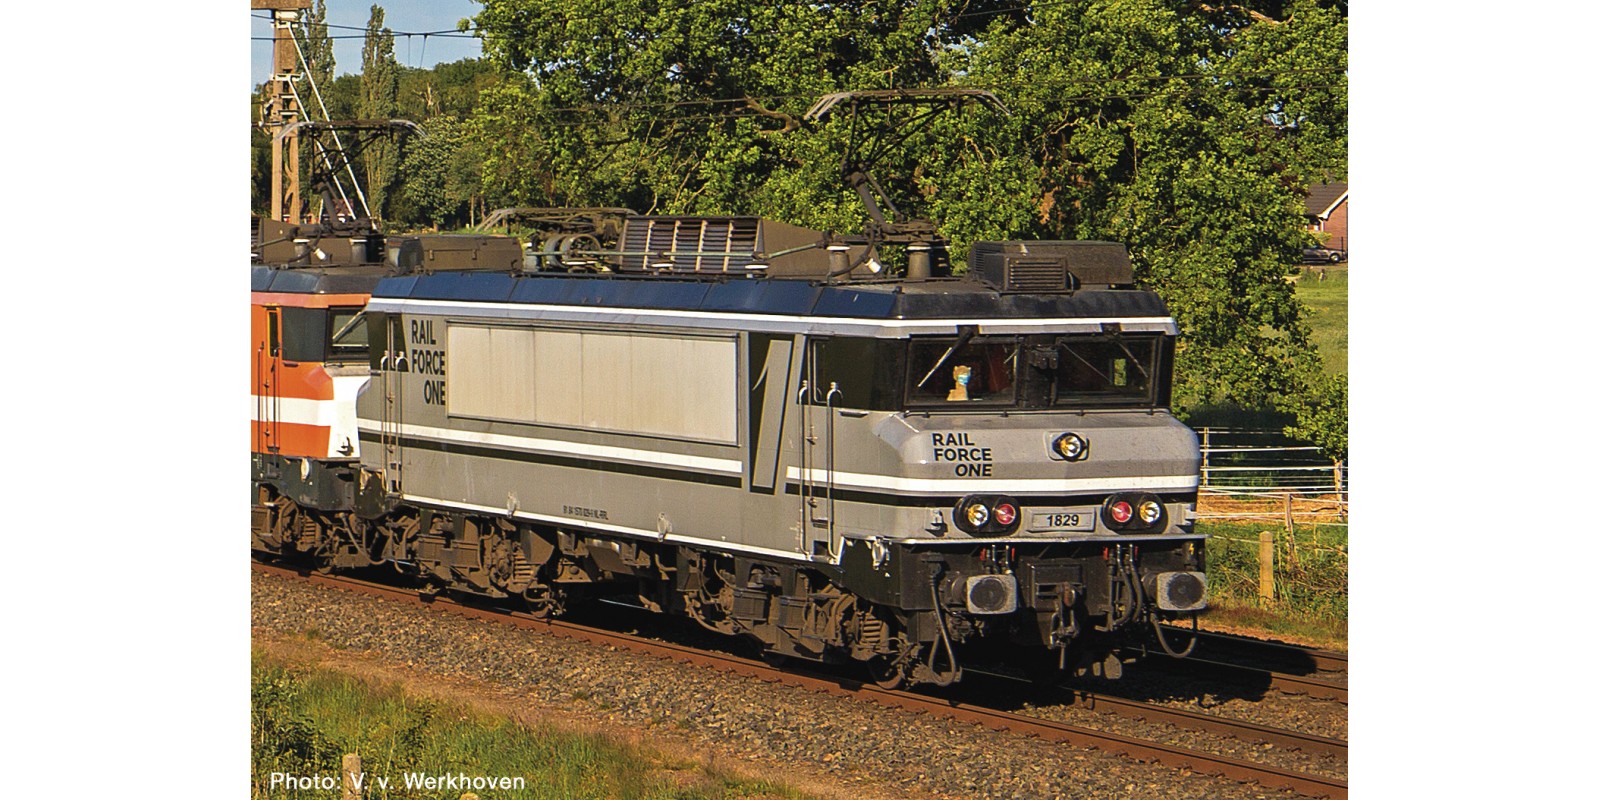 RO70163 Electric locomotive 1829, Rail Force One